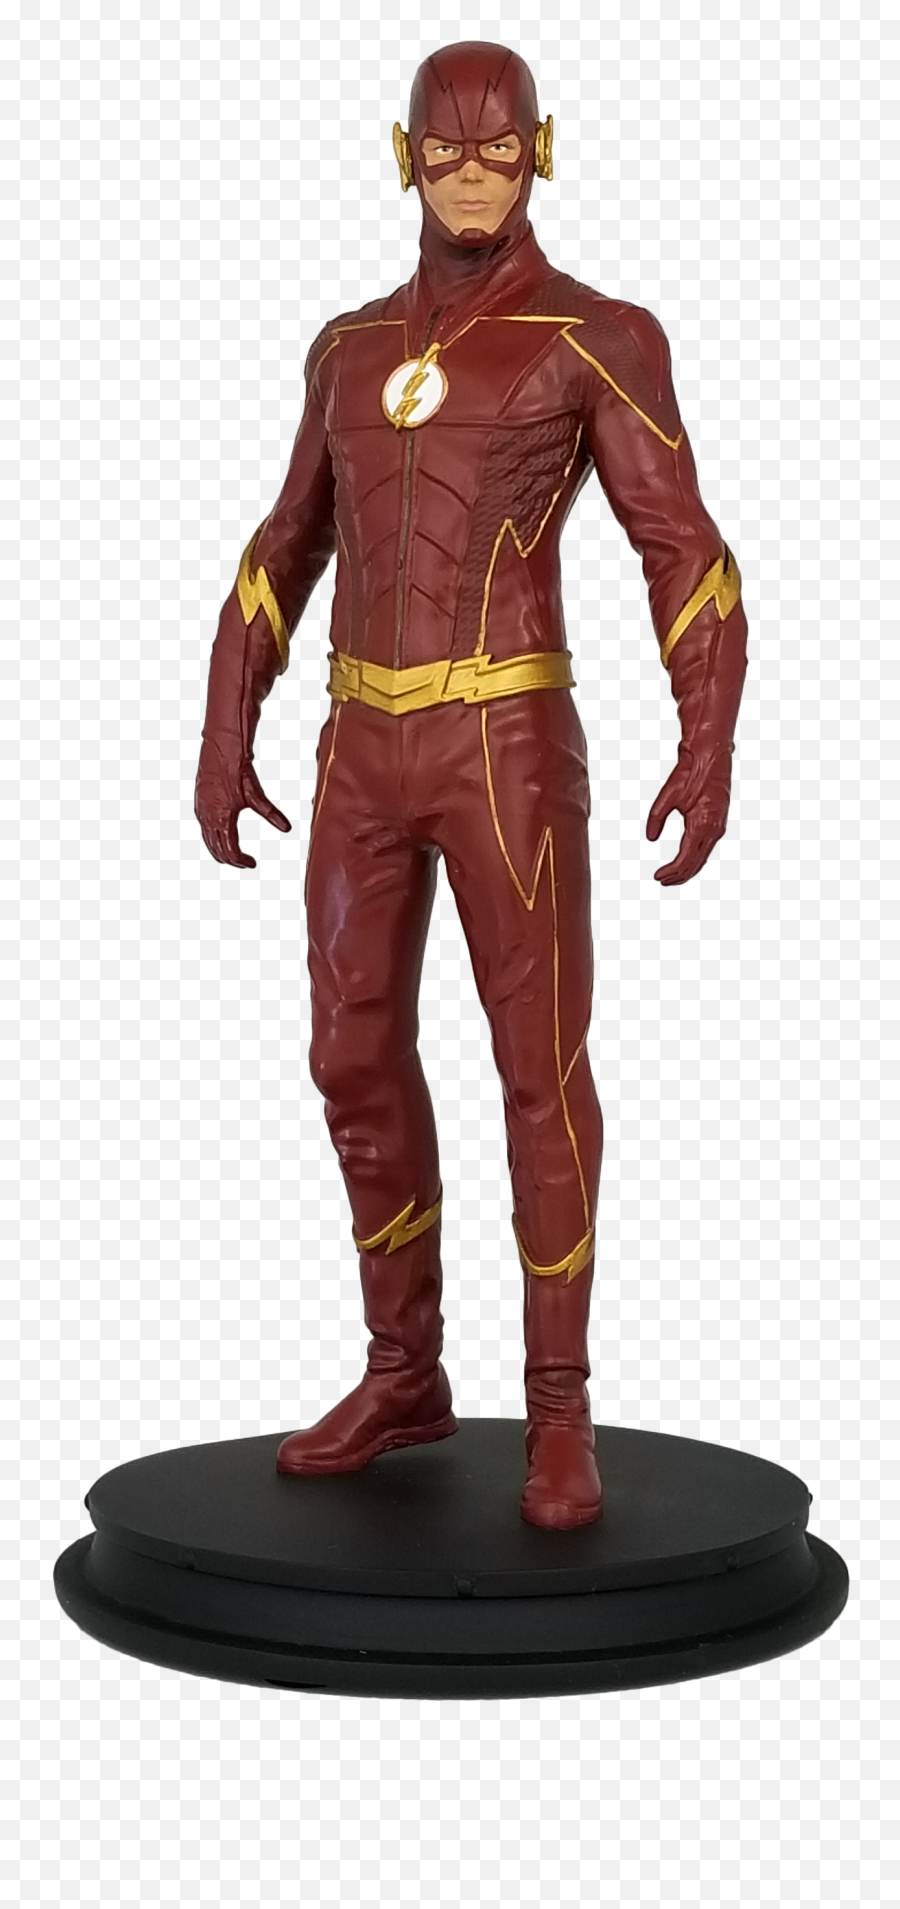 Flash - Flash Season 4 Statue Png,The Flash Png